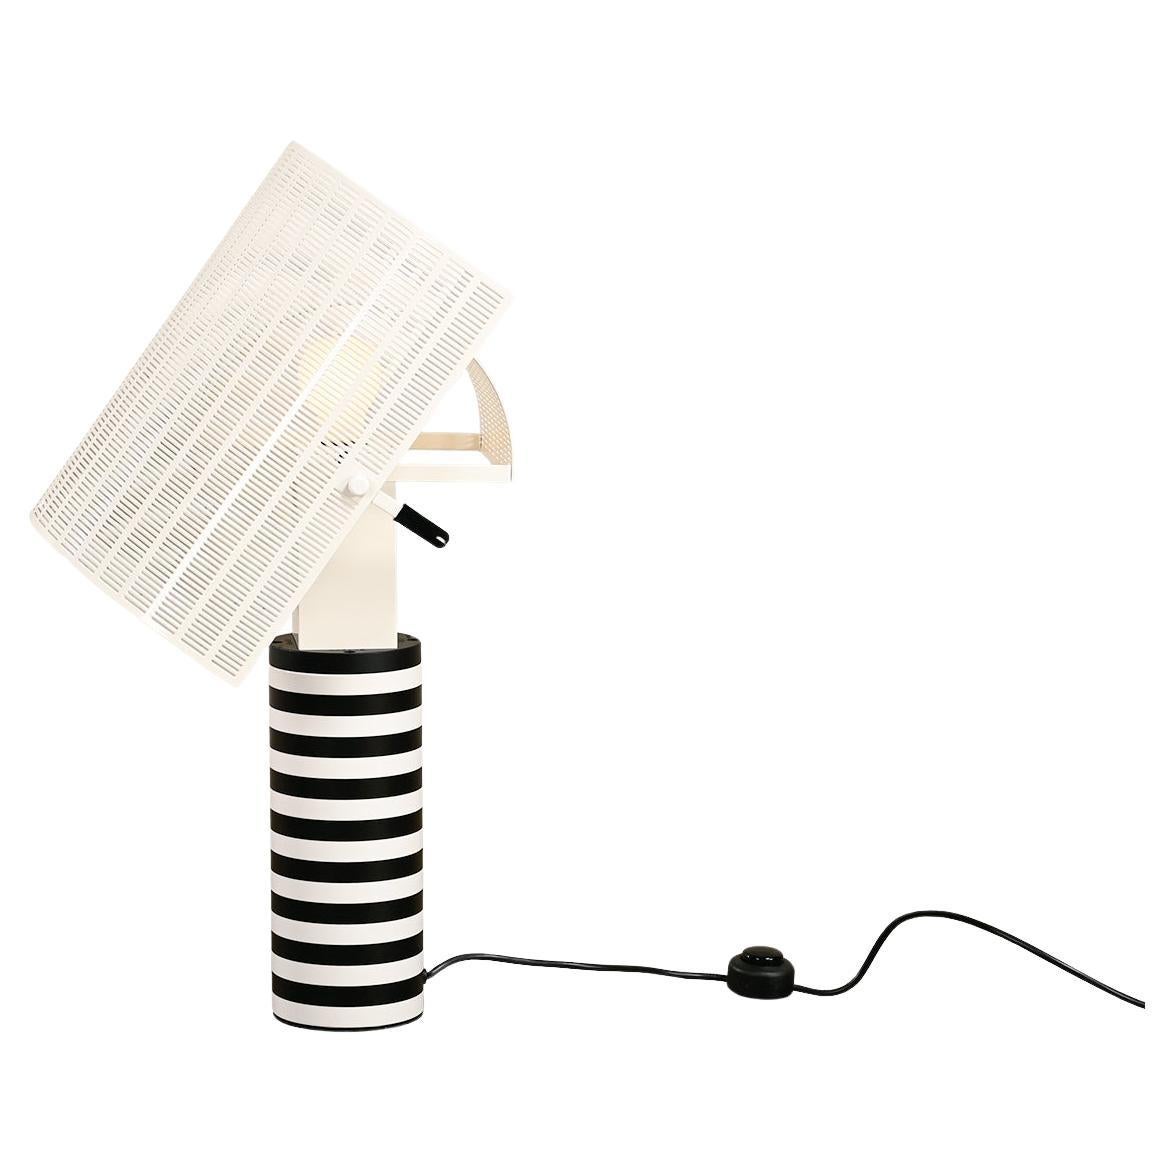 Mario Botta Shogun Table Lamp in black and white for Artemide, Italy For Sale